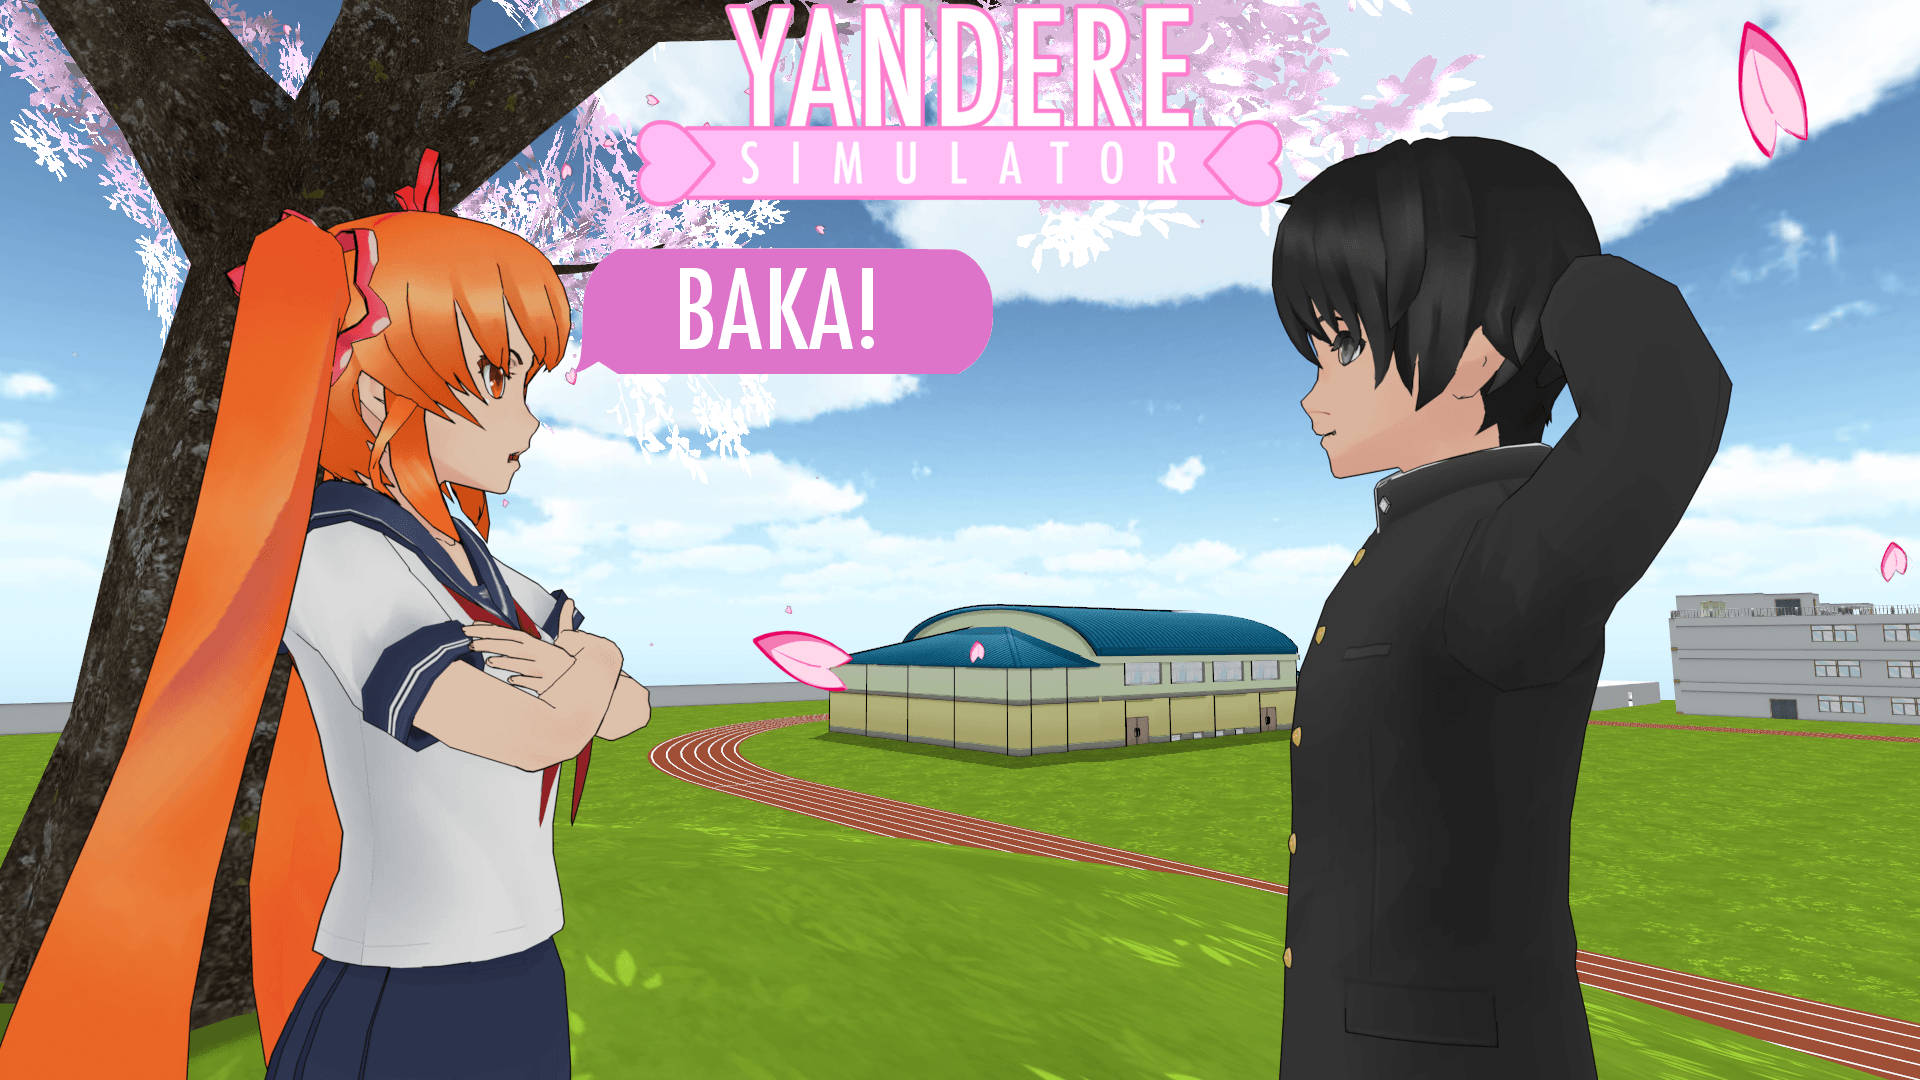 When Osana and Taro hang after school.. #yanderesimulator #yandere